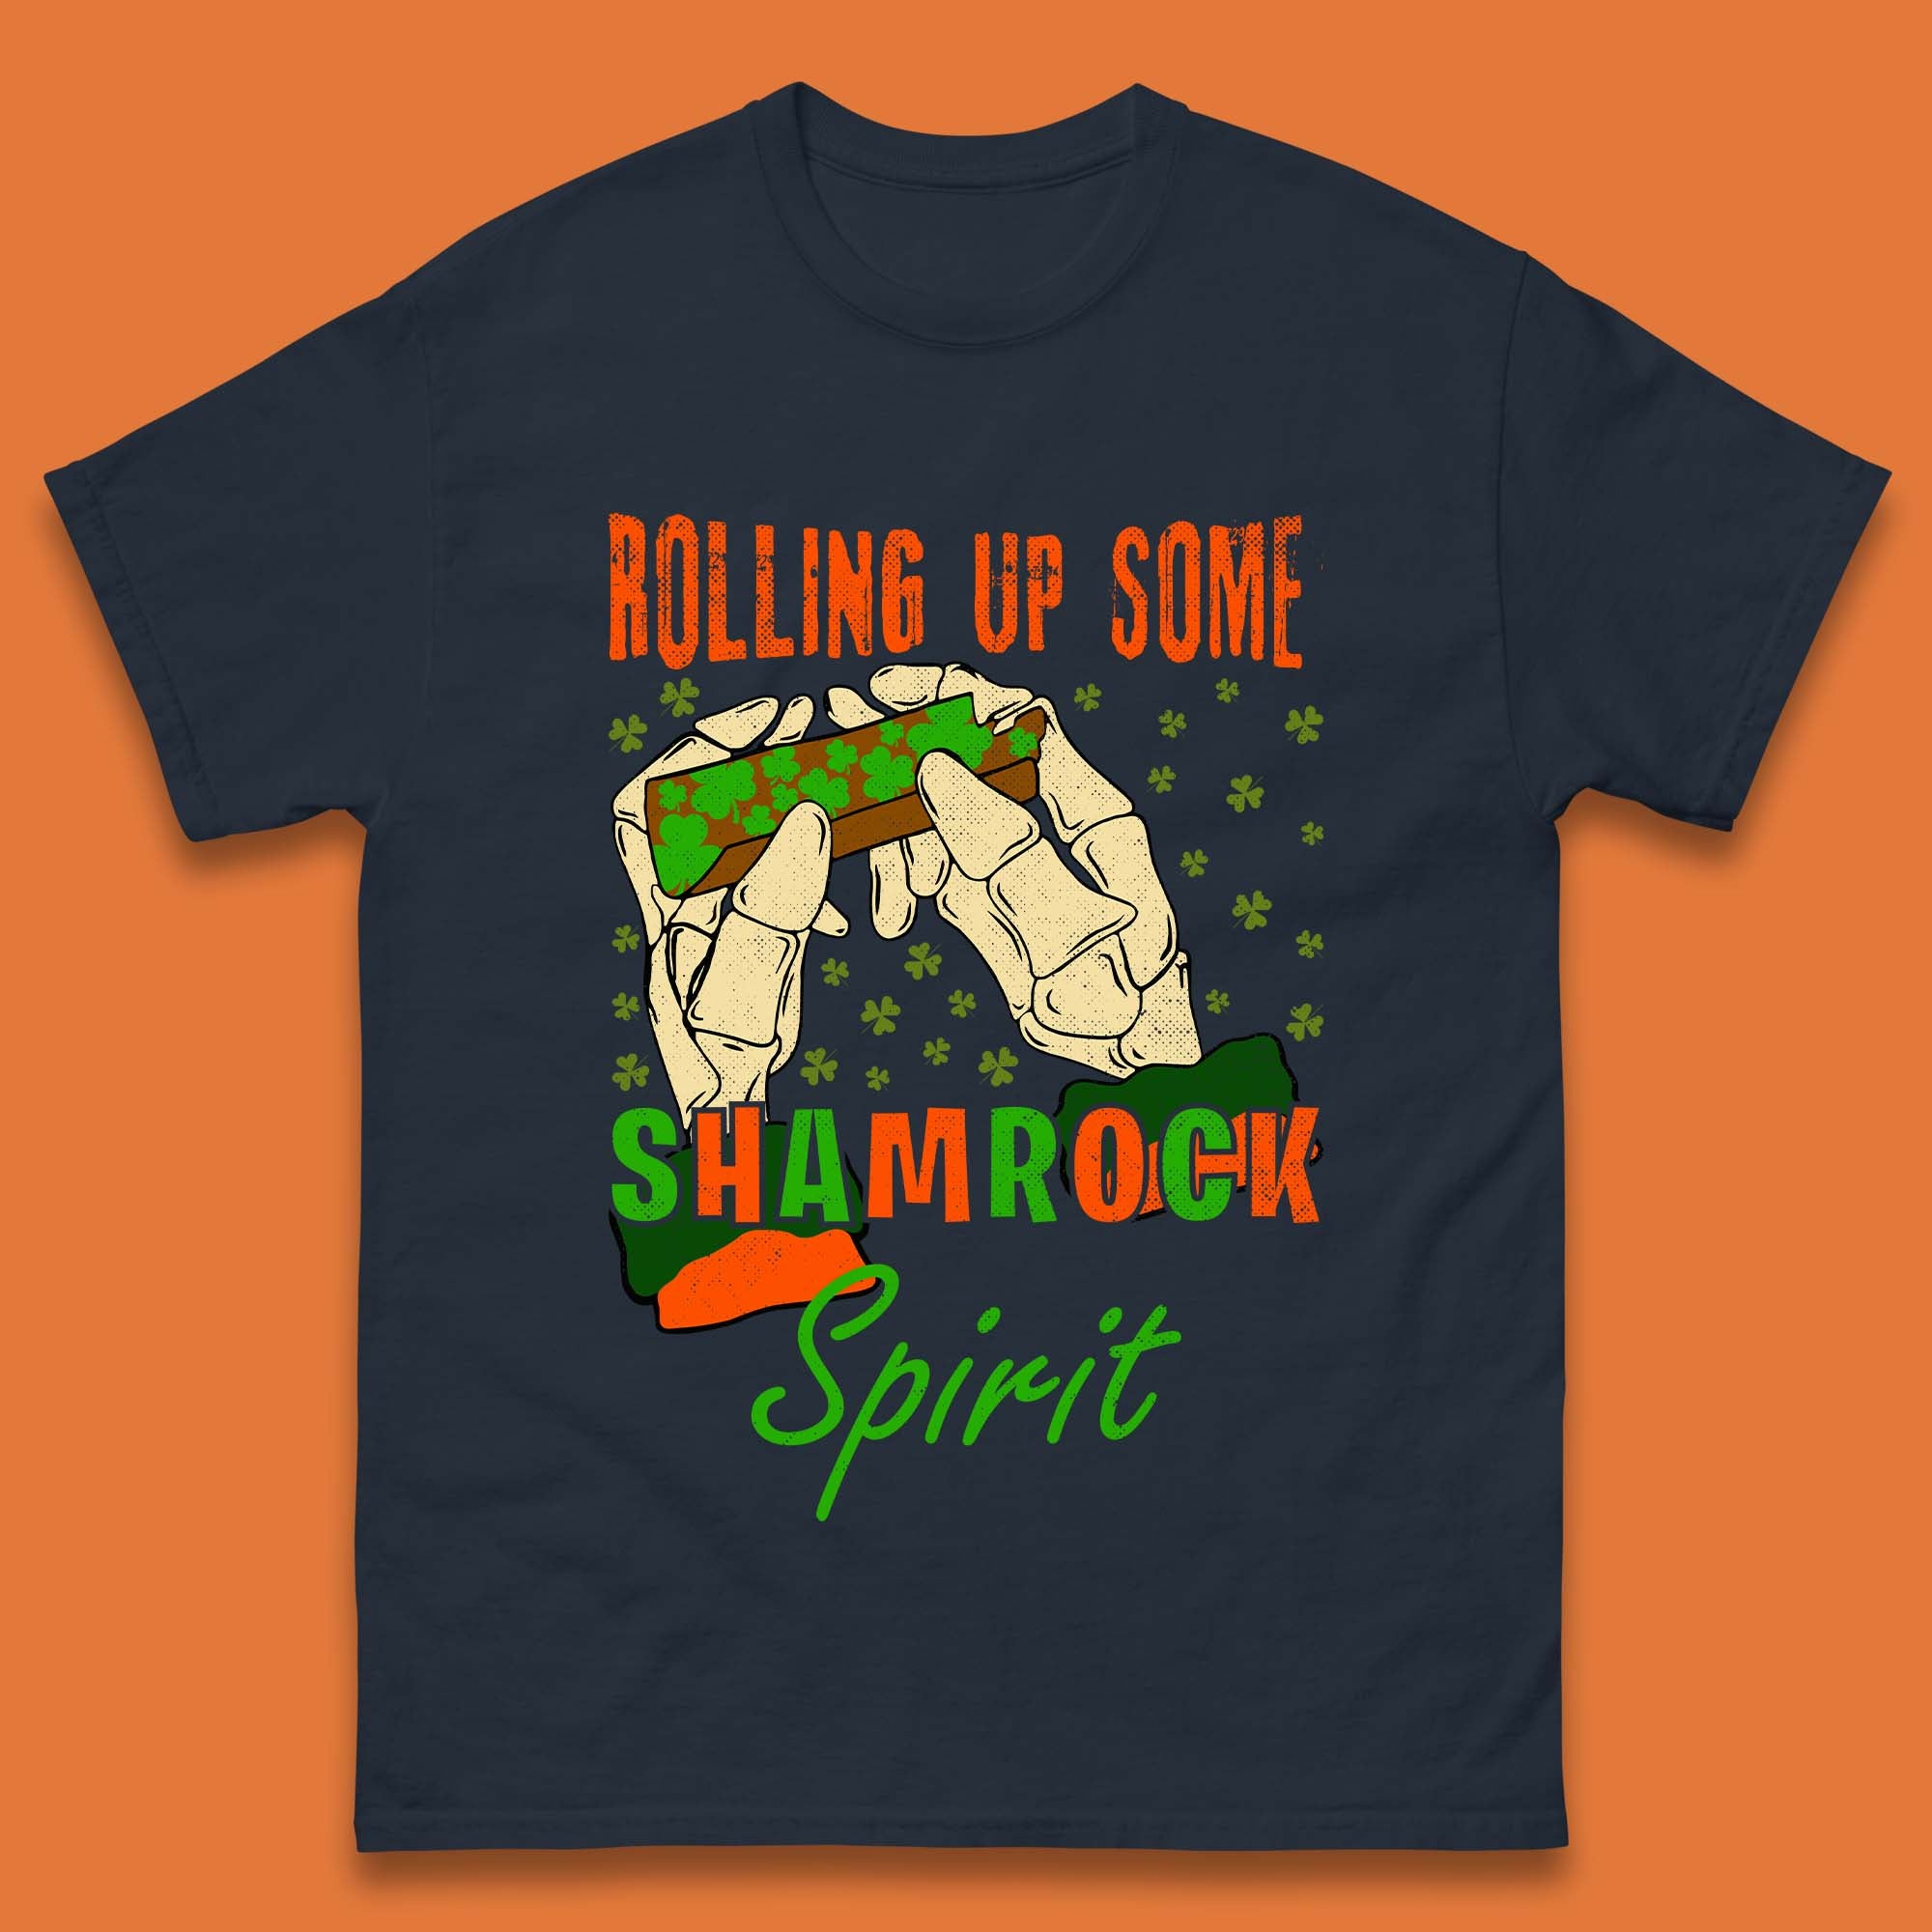 Rolling Up Some Shamrock Spirit Mens T-Shirt